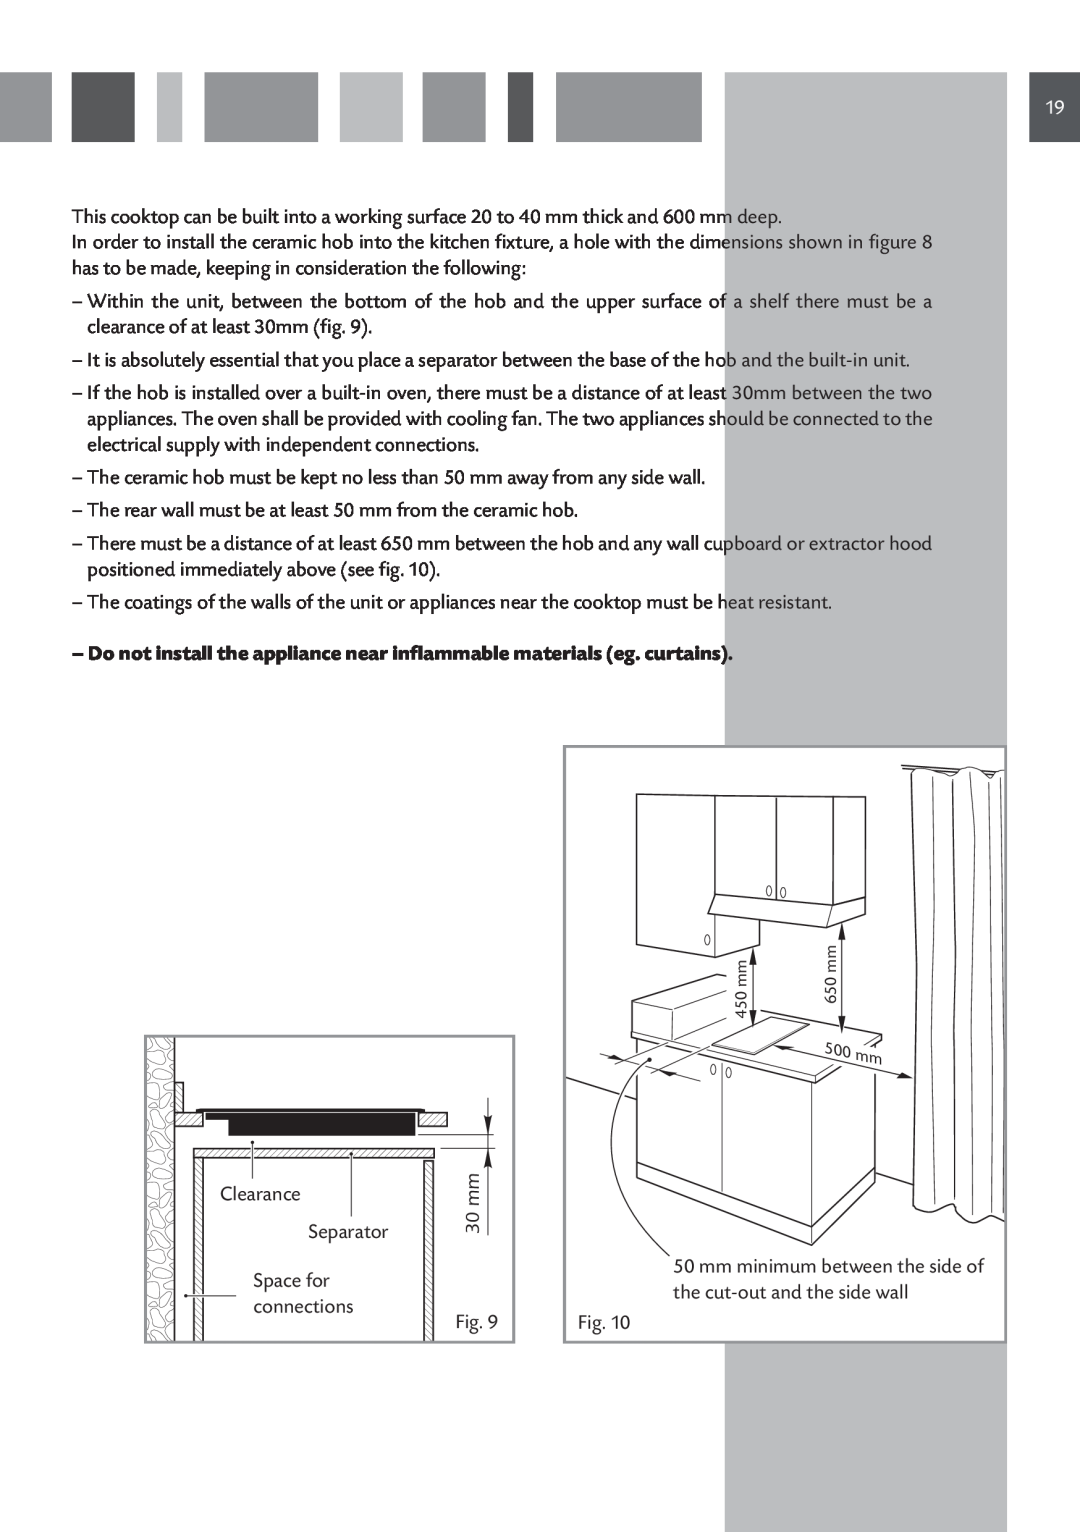 CDA HVC 32 manual Do not install the appliance near inflammable materials eg. curtains 